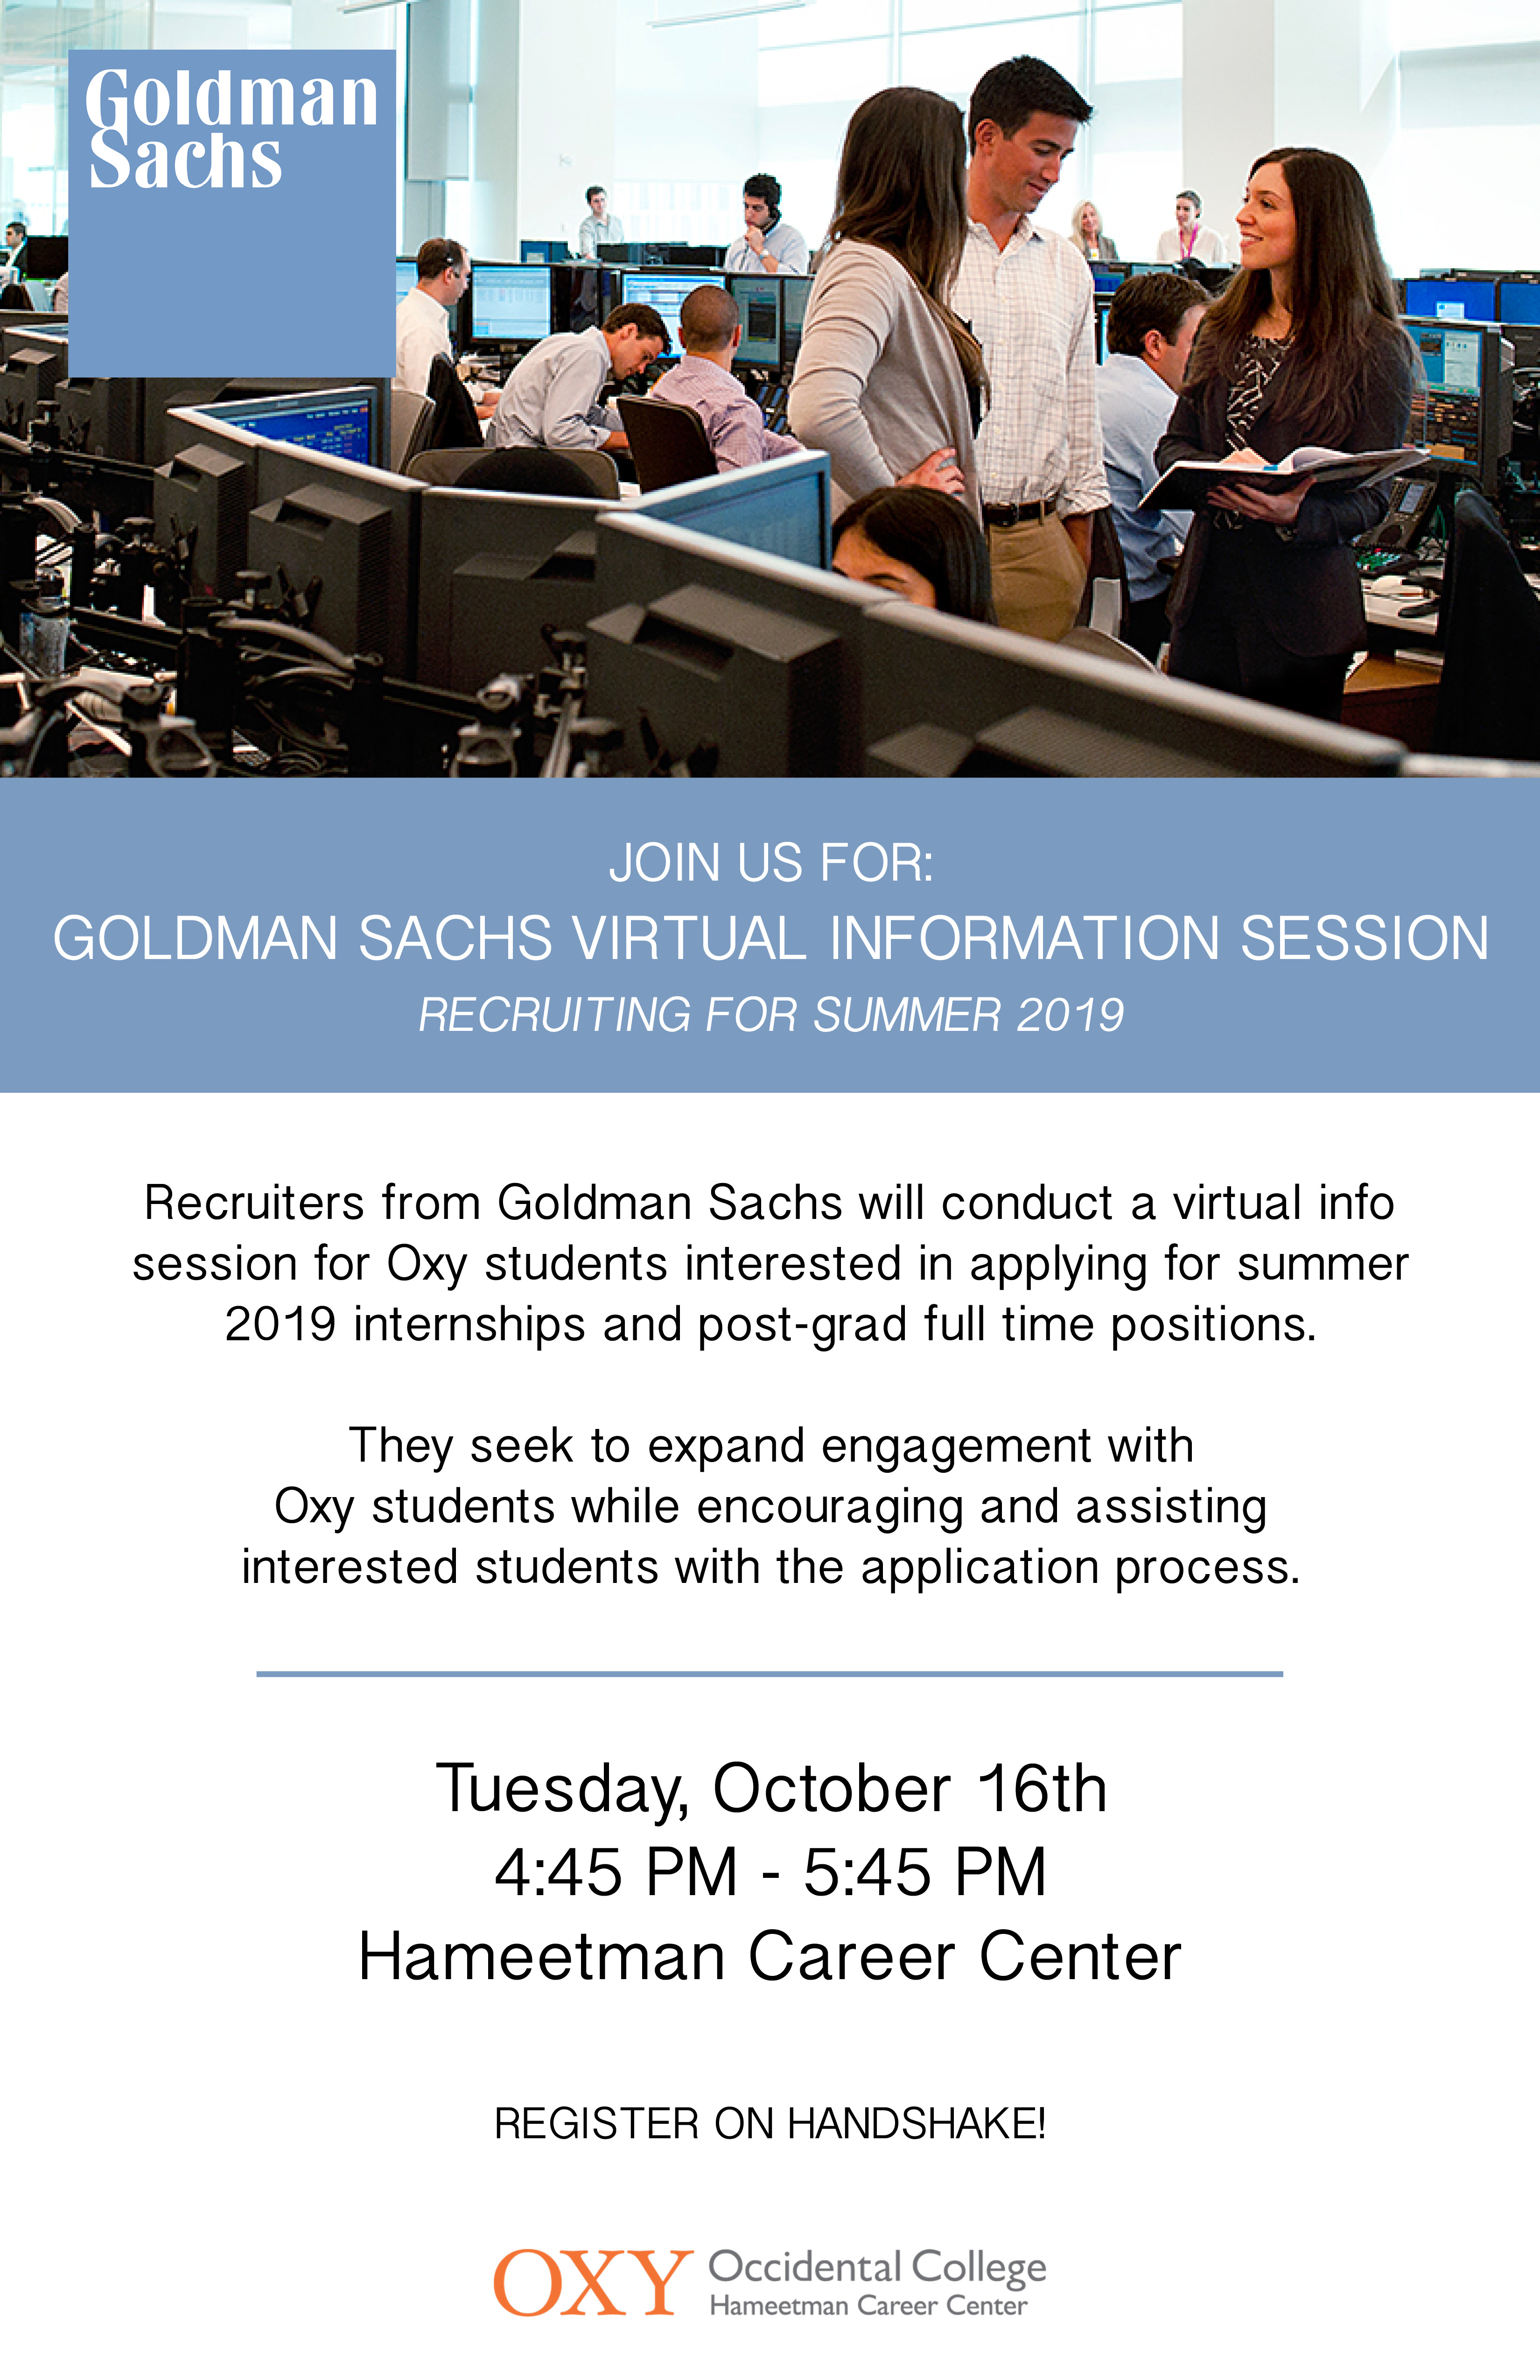 Image for Goldman Sachs Virtual Information Session Event